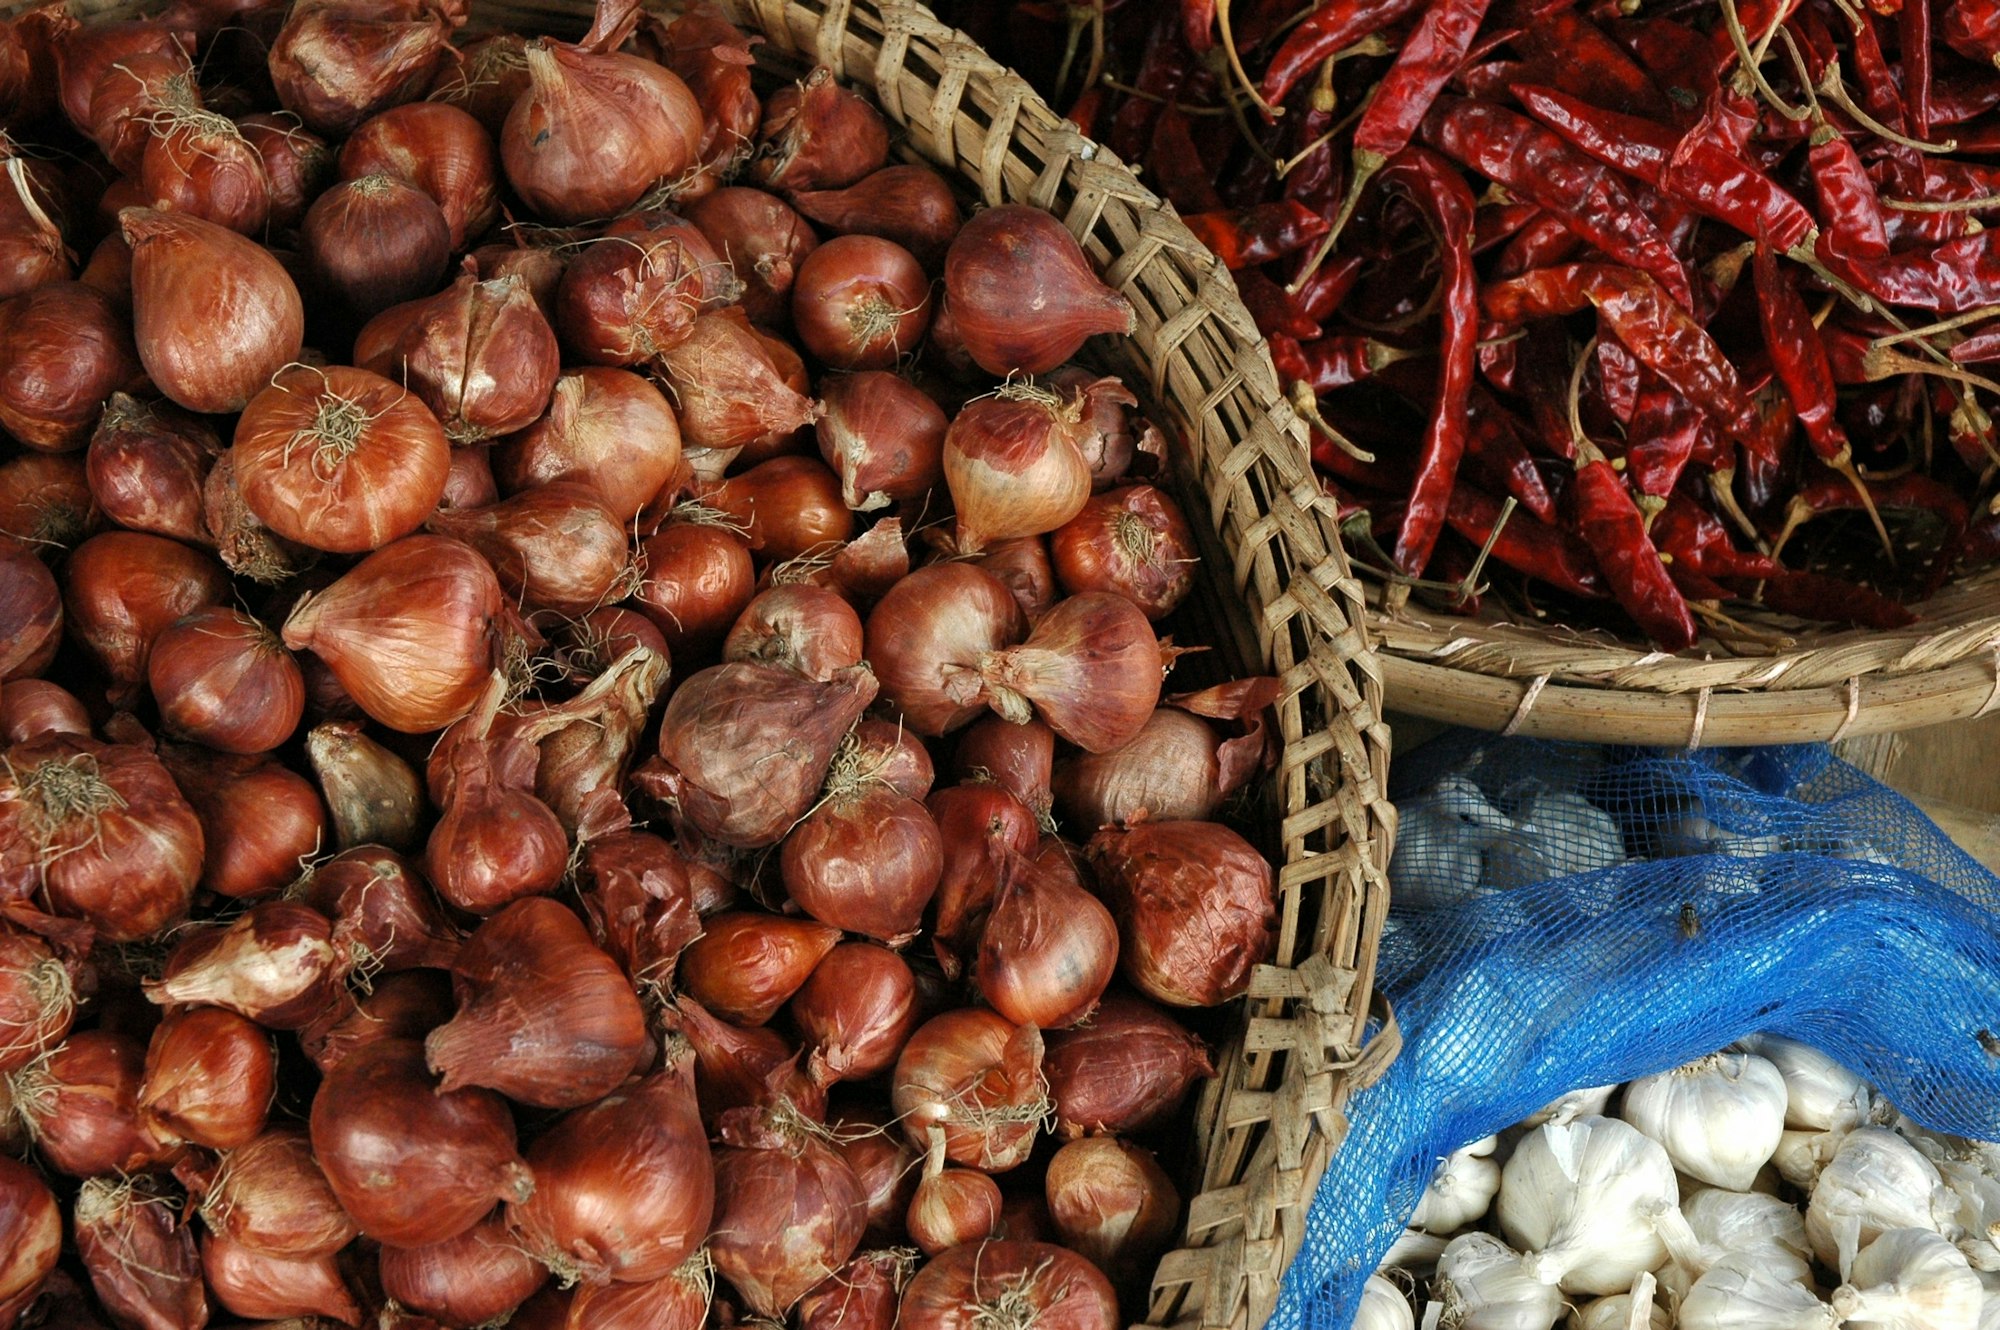 Basket of onions, chiles, garlic, market vendors goods, market, near the airport, Dhaka, Bangladesh